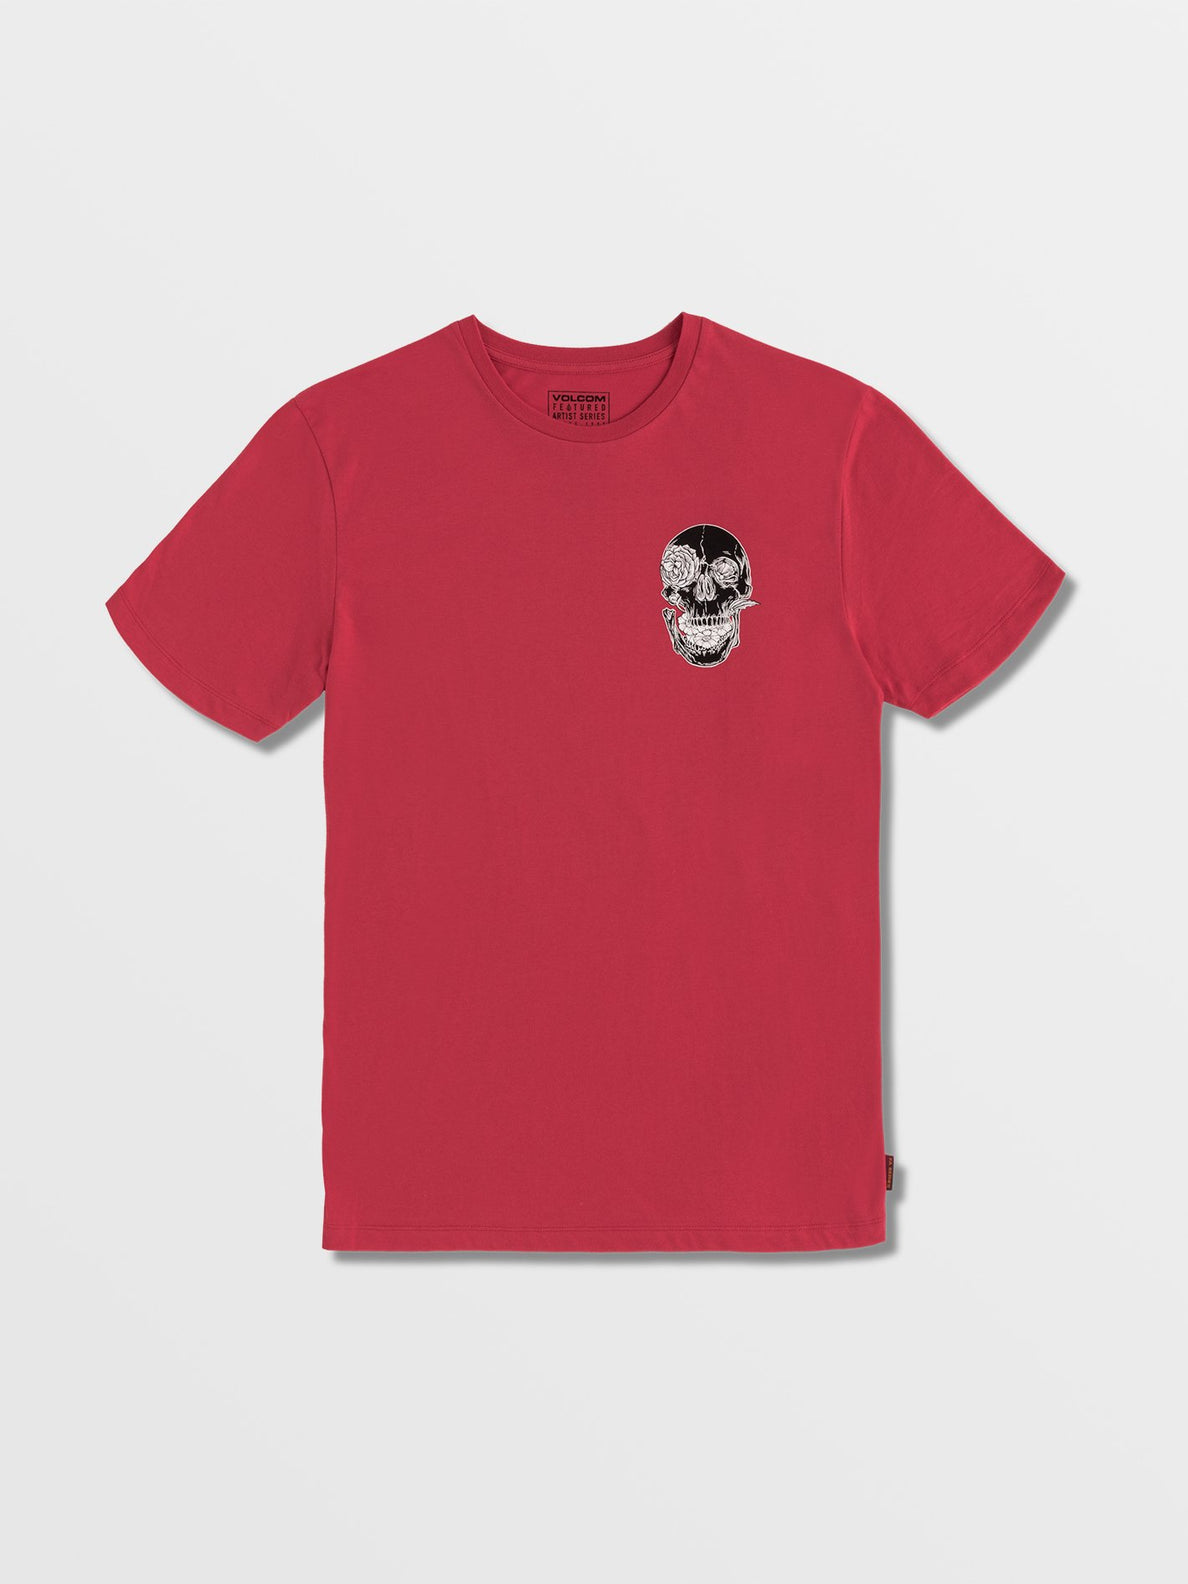 Fortifem T-shirt - Carmine Red